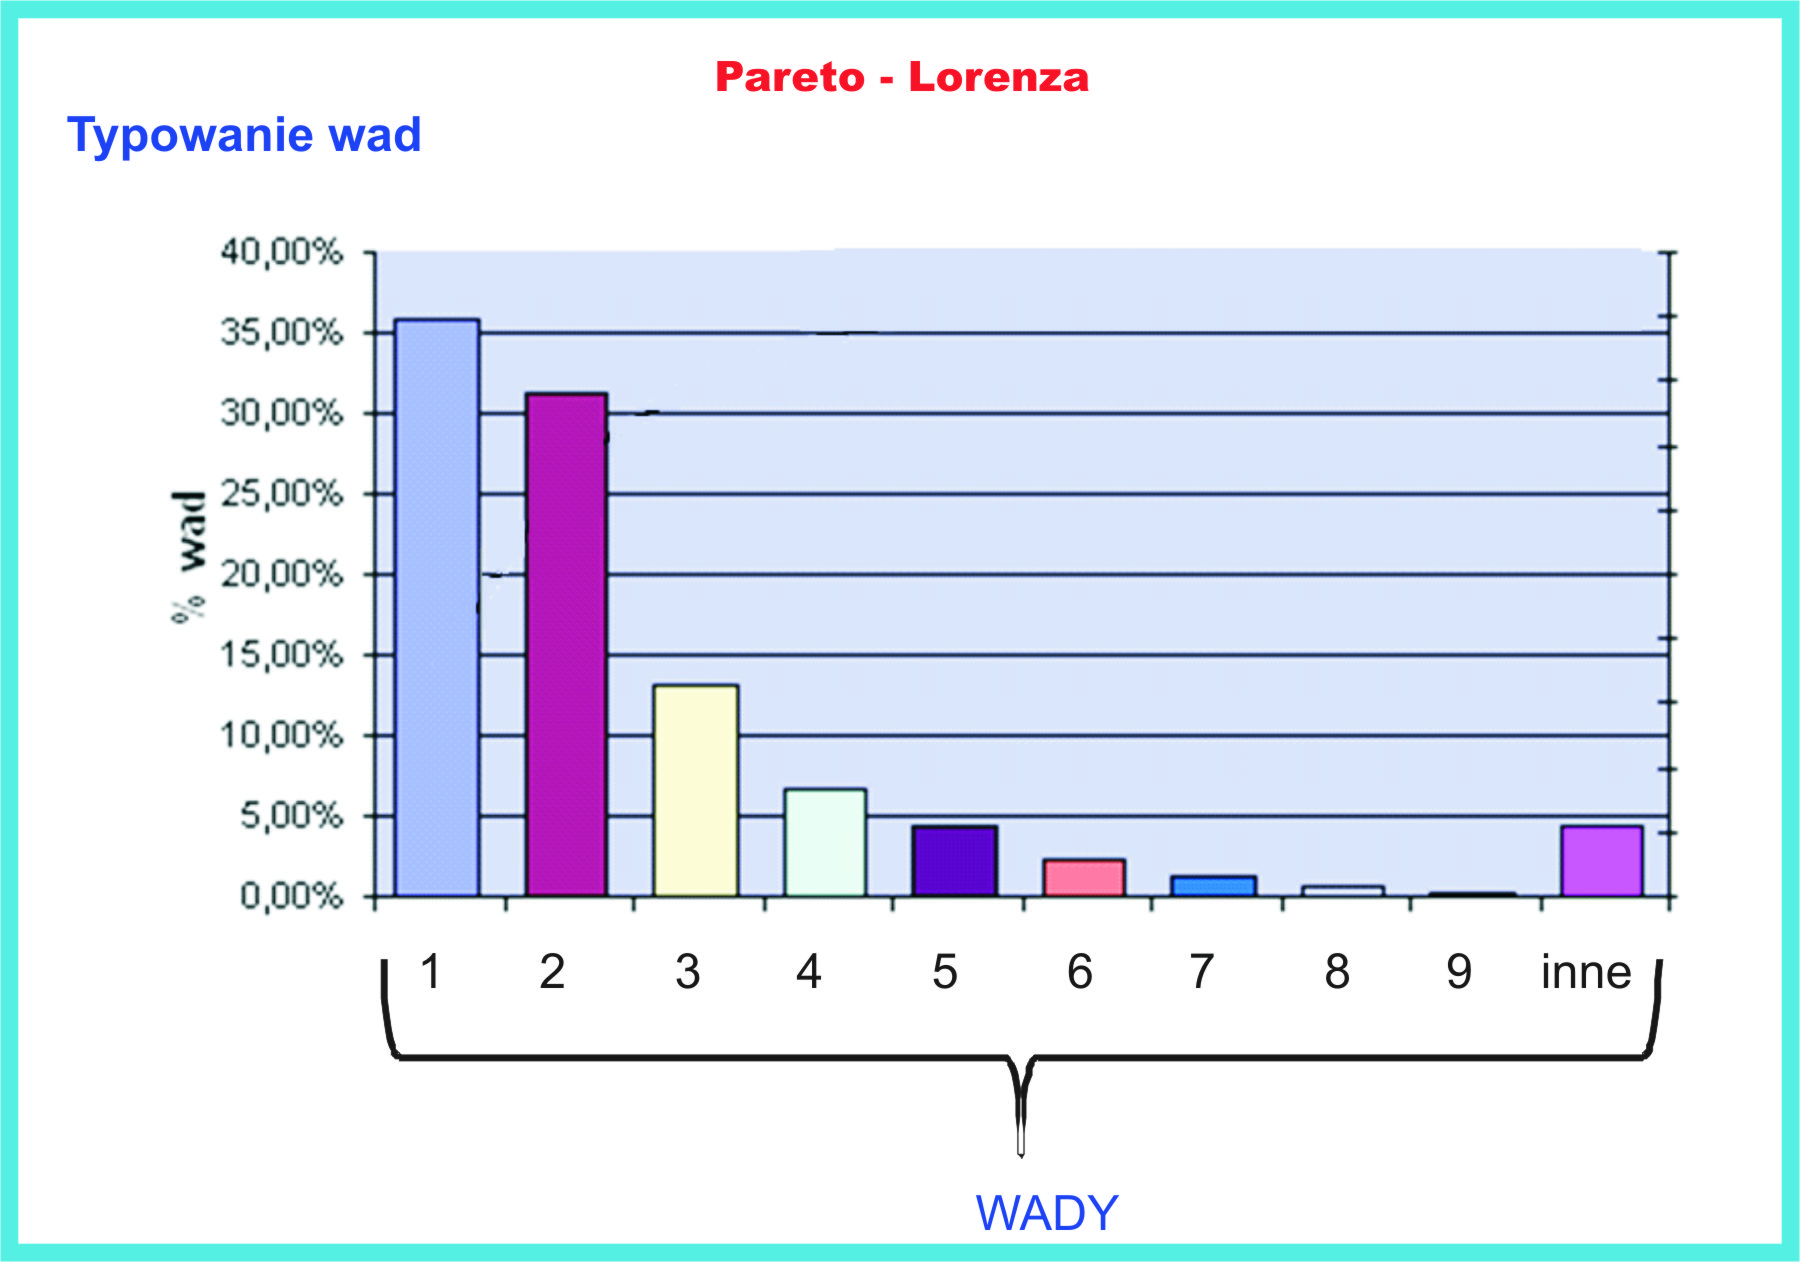 Pareto - Lorenza - Typowanie wad